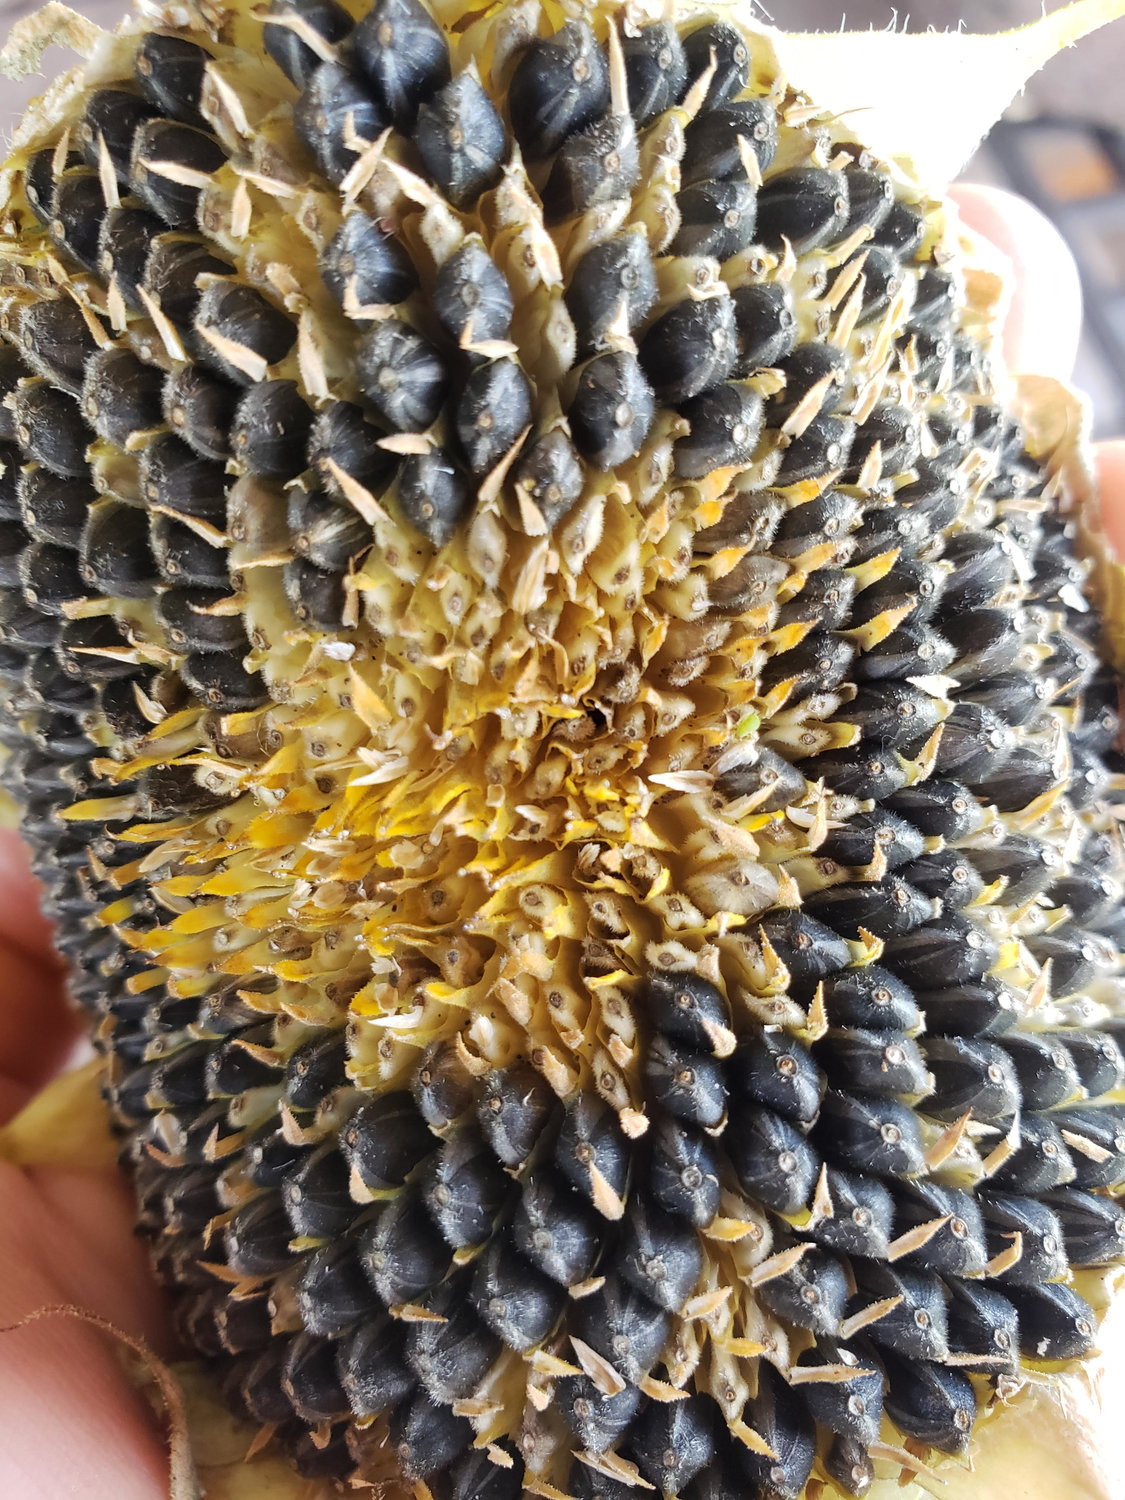 A sunflower seed head, close up.